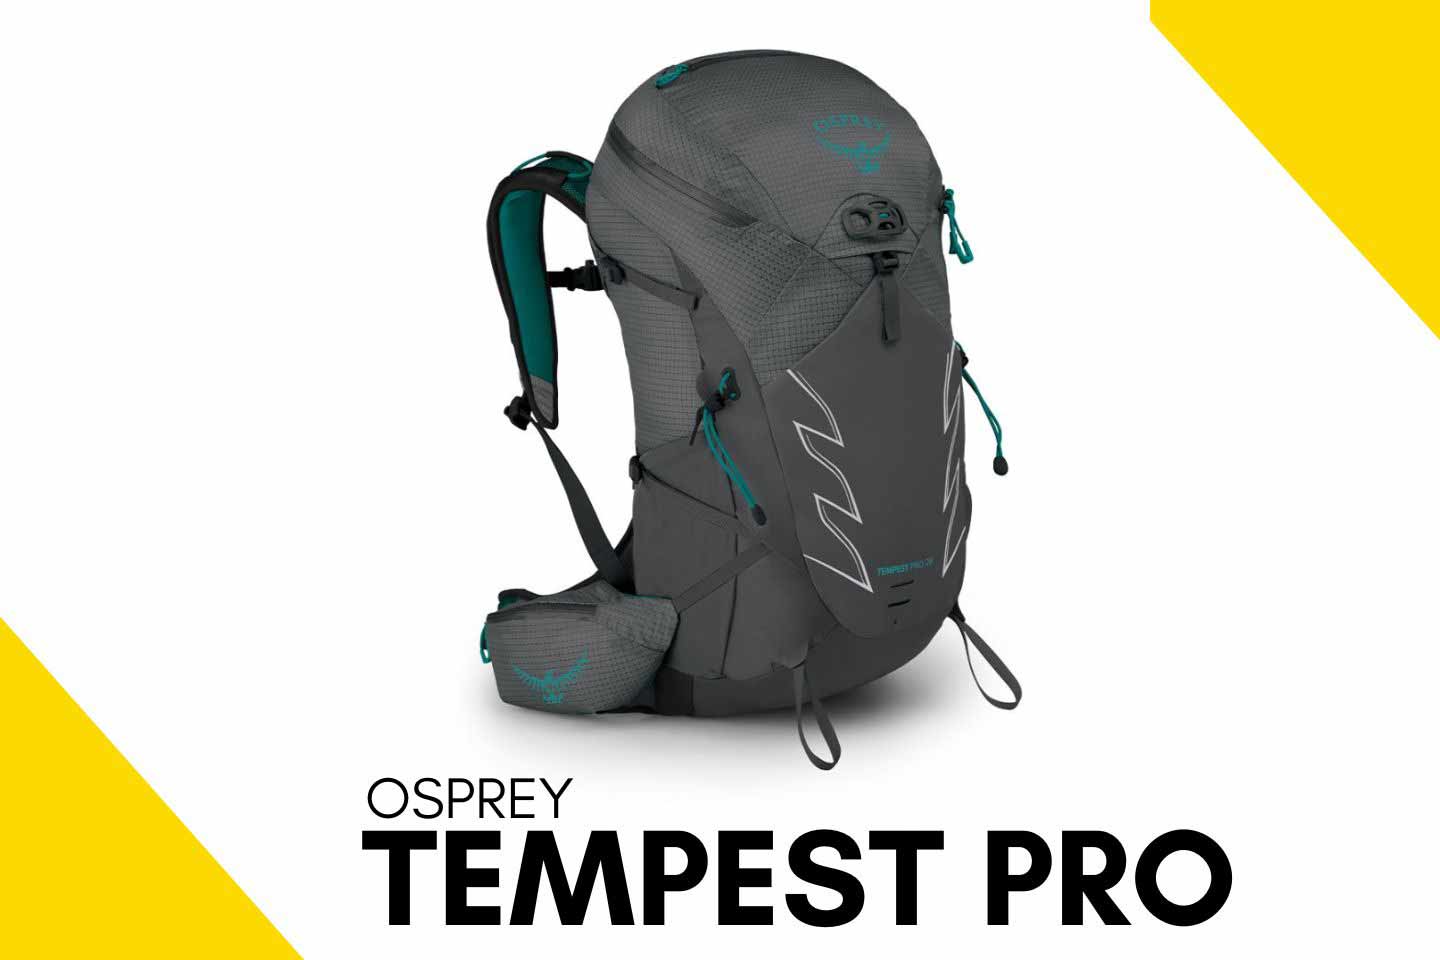 osprey tempest pro review